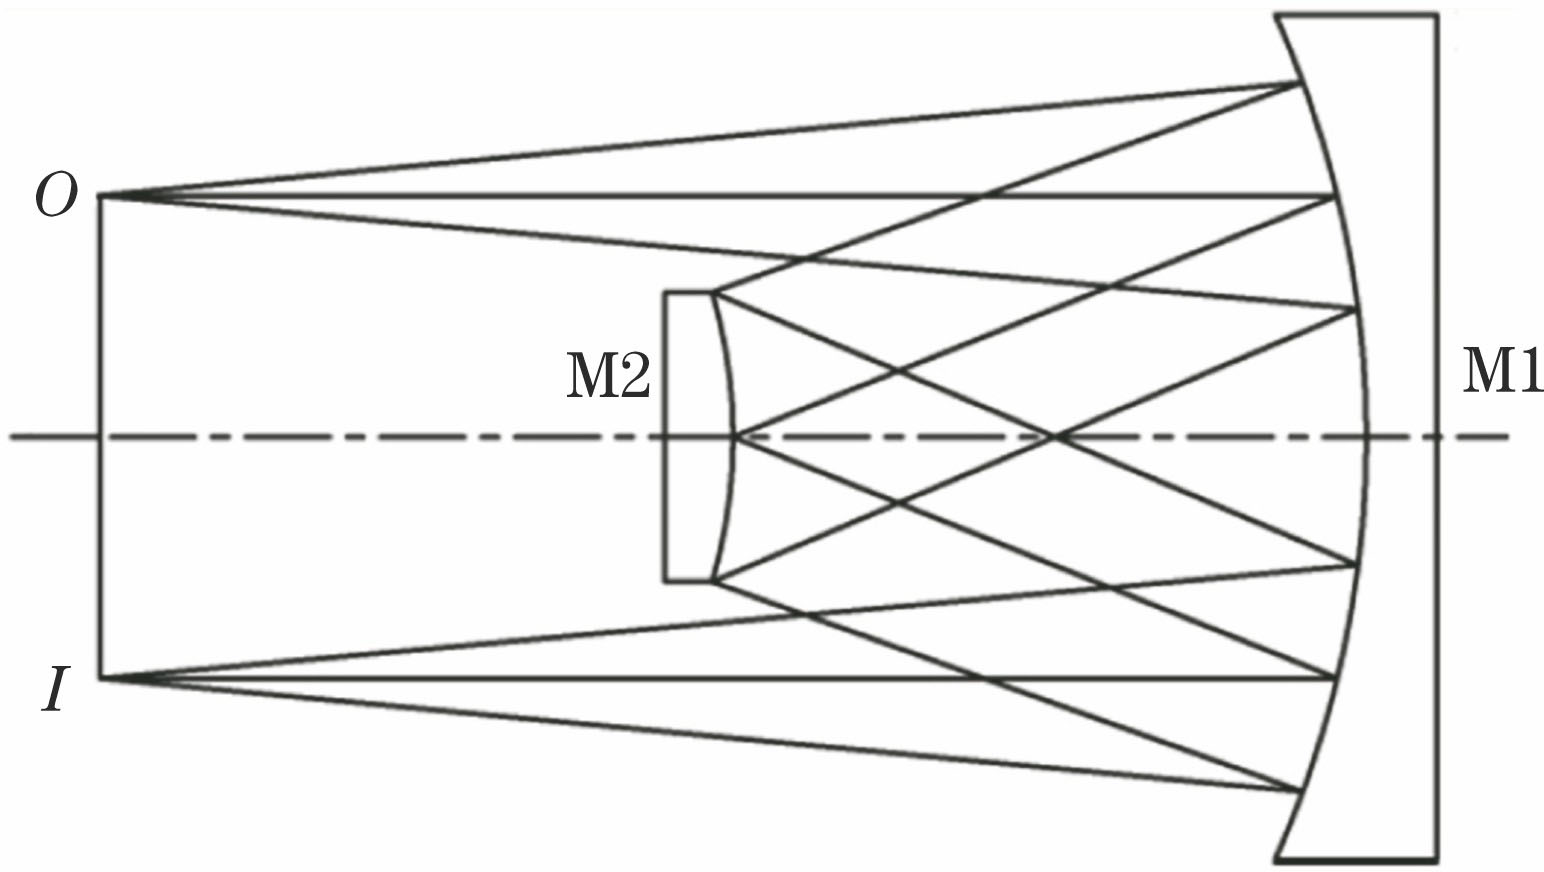 Schematic diagram of Offner configuration